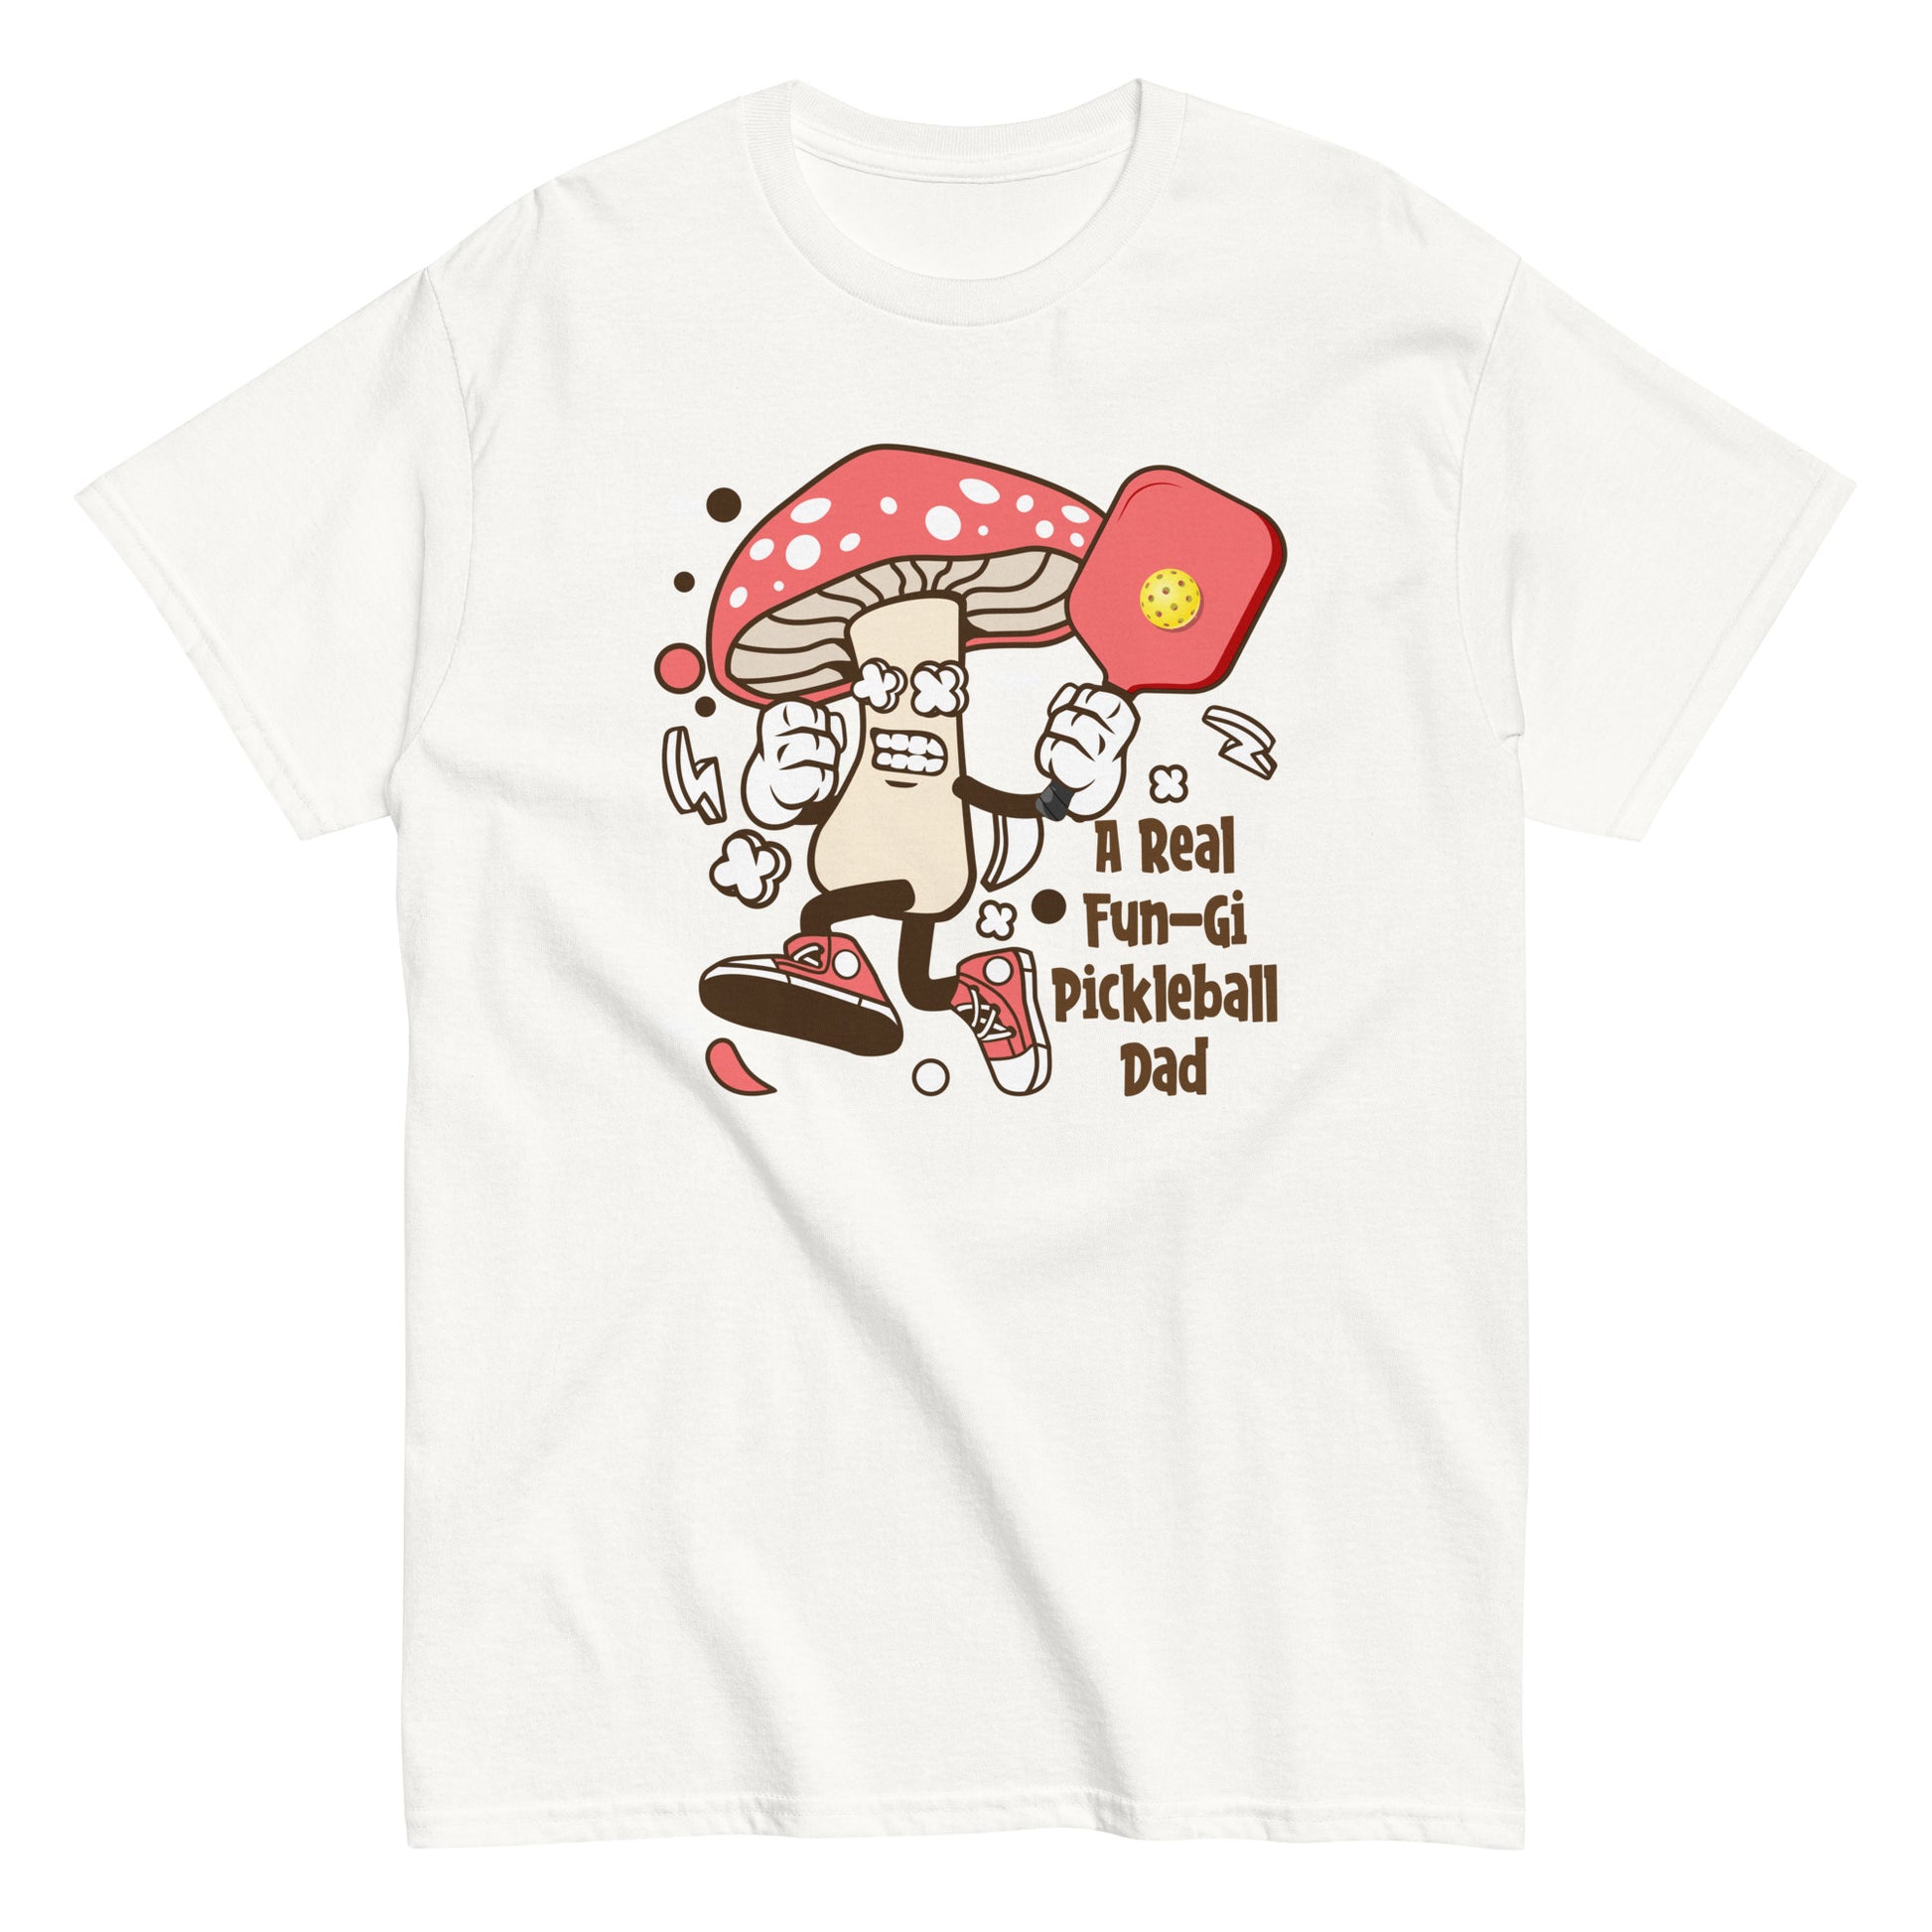 Retro Pickleball Pun: "A Real Fun-Gi Pickleball Dad", Father's Day Mens White T-Shirt